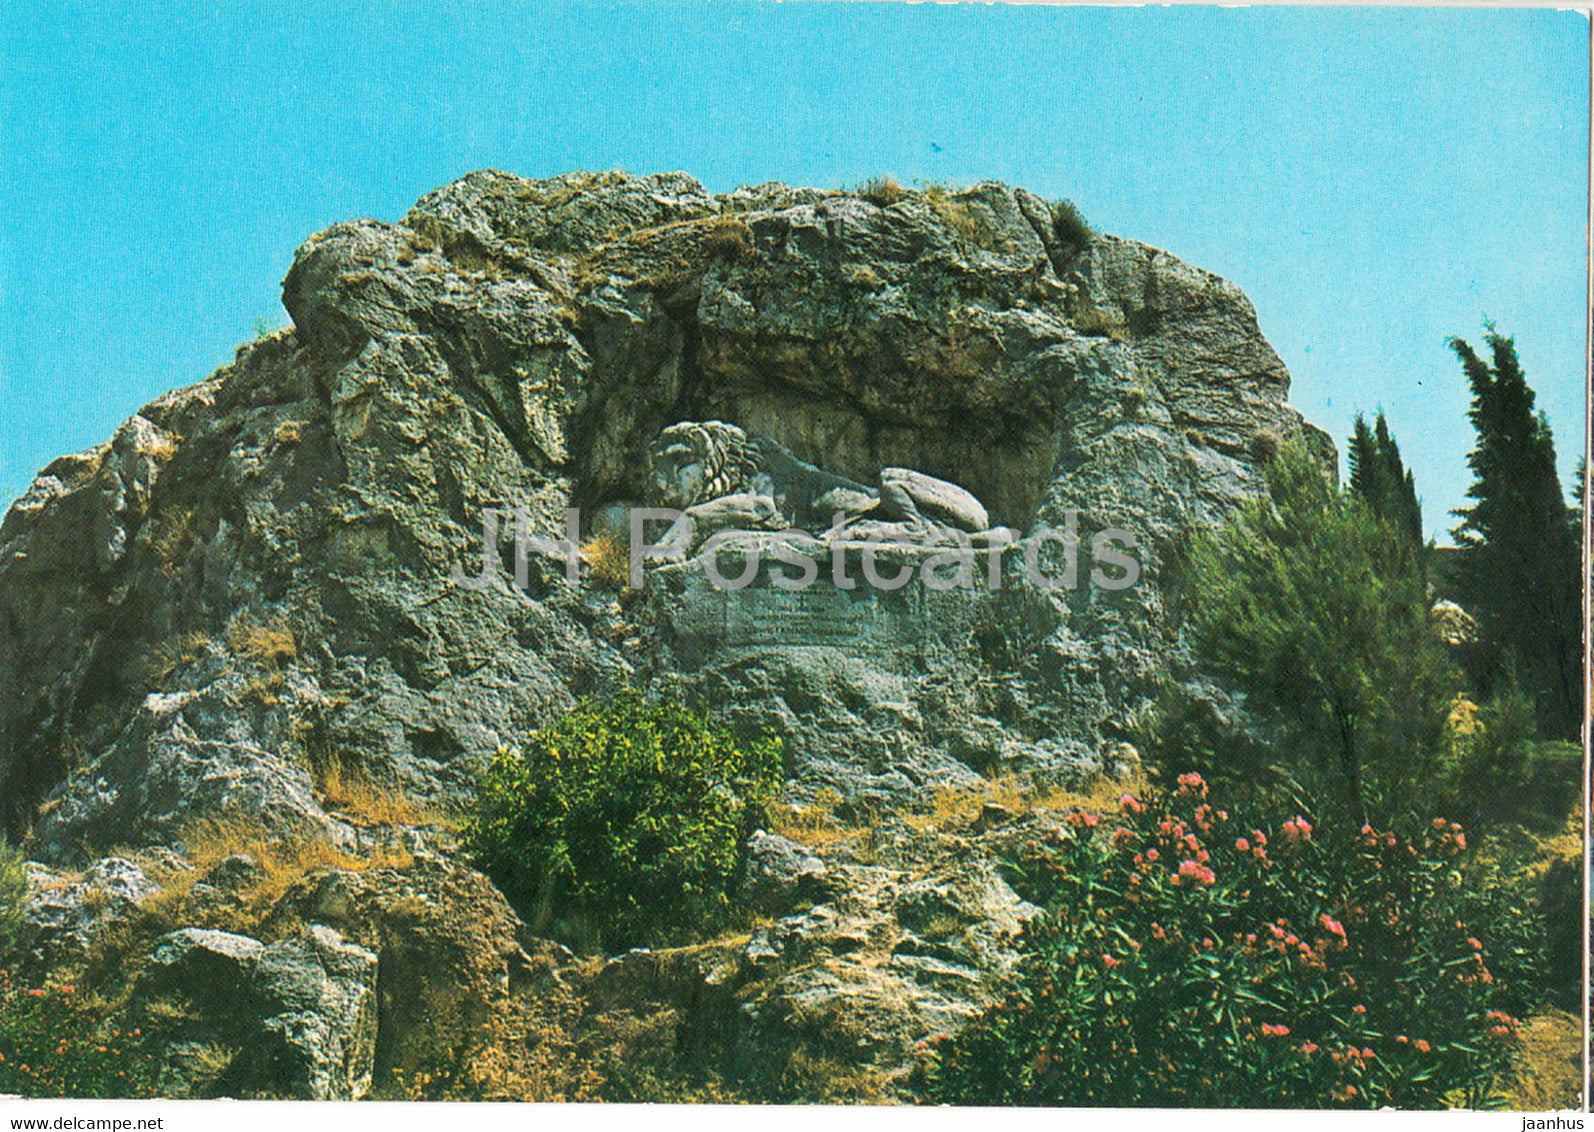 Nauplia - The Lion of the Bavarians - 253 - Greece - unused - JH Postcards